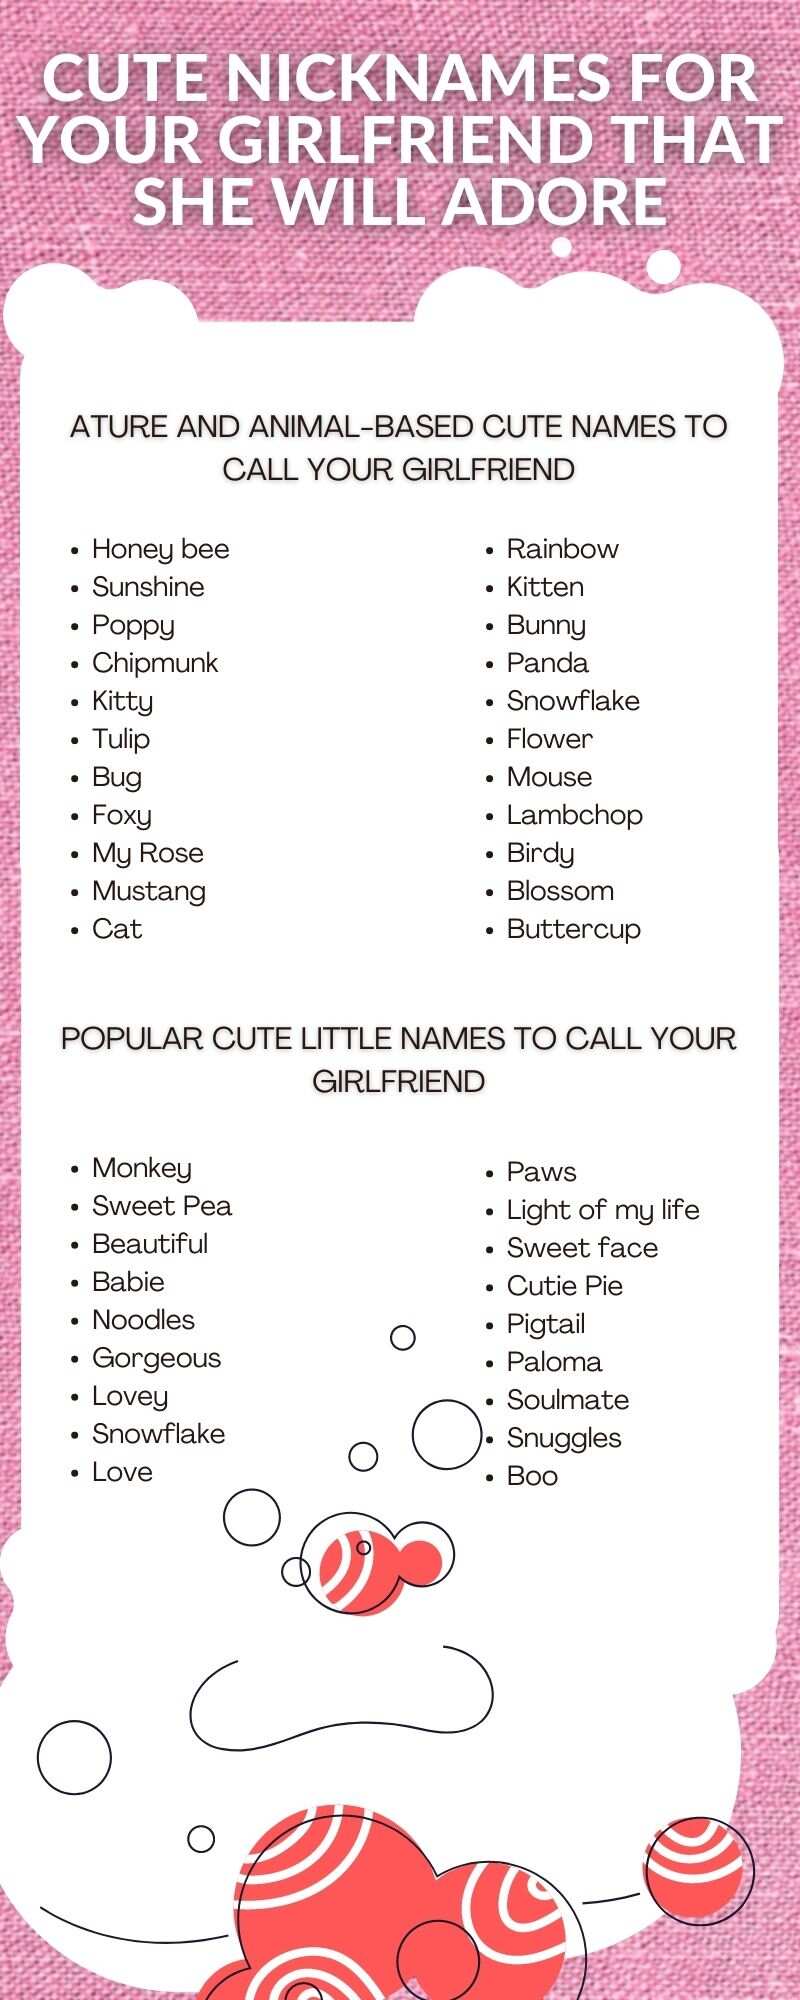 My nicknames gf for Cute Nicknames